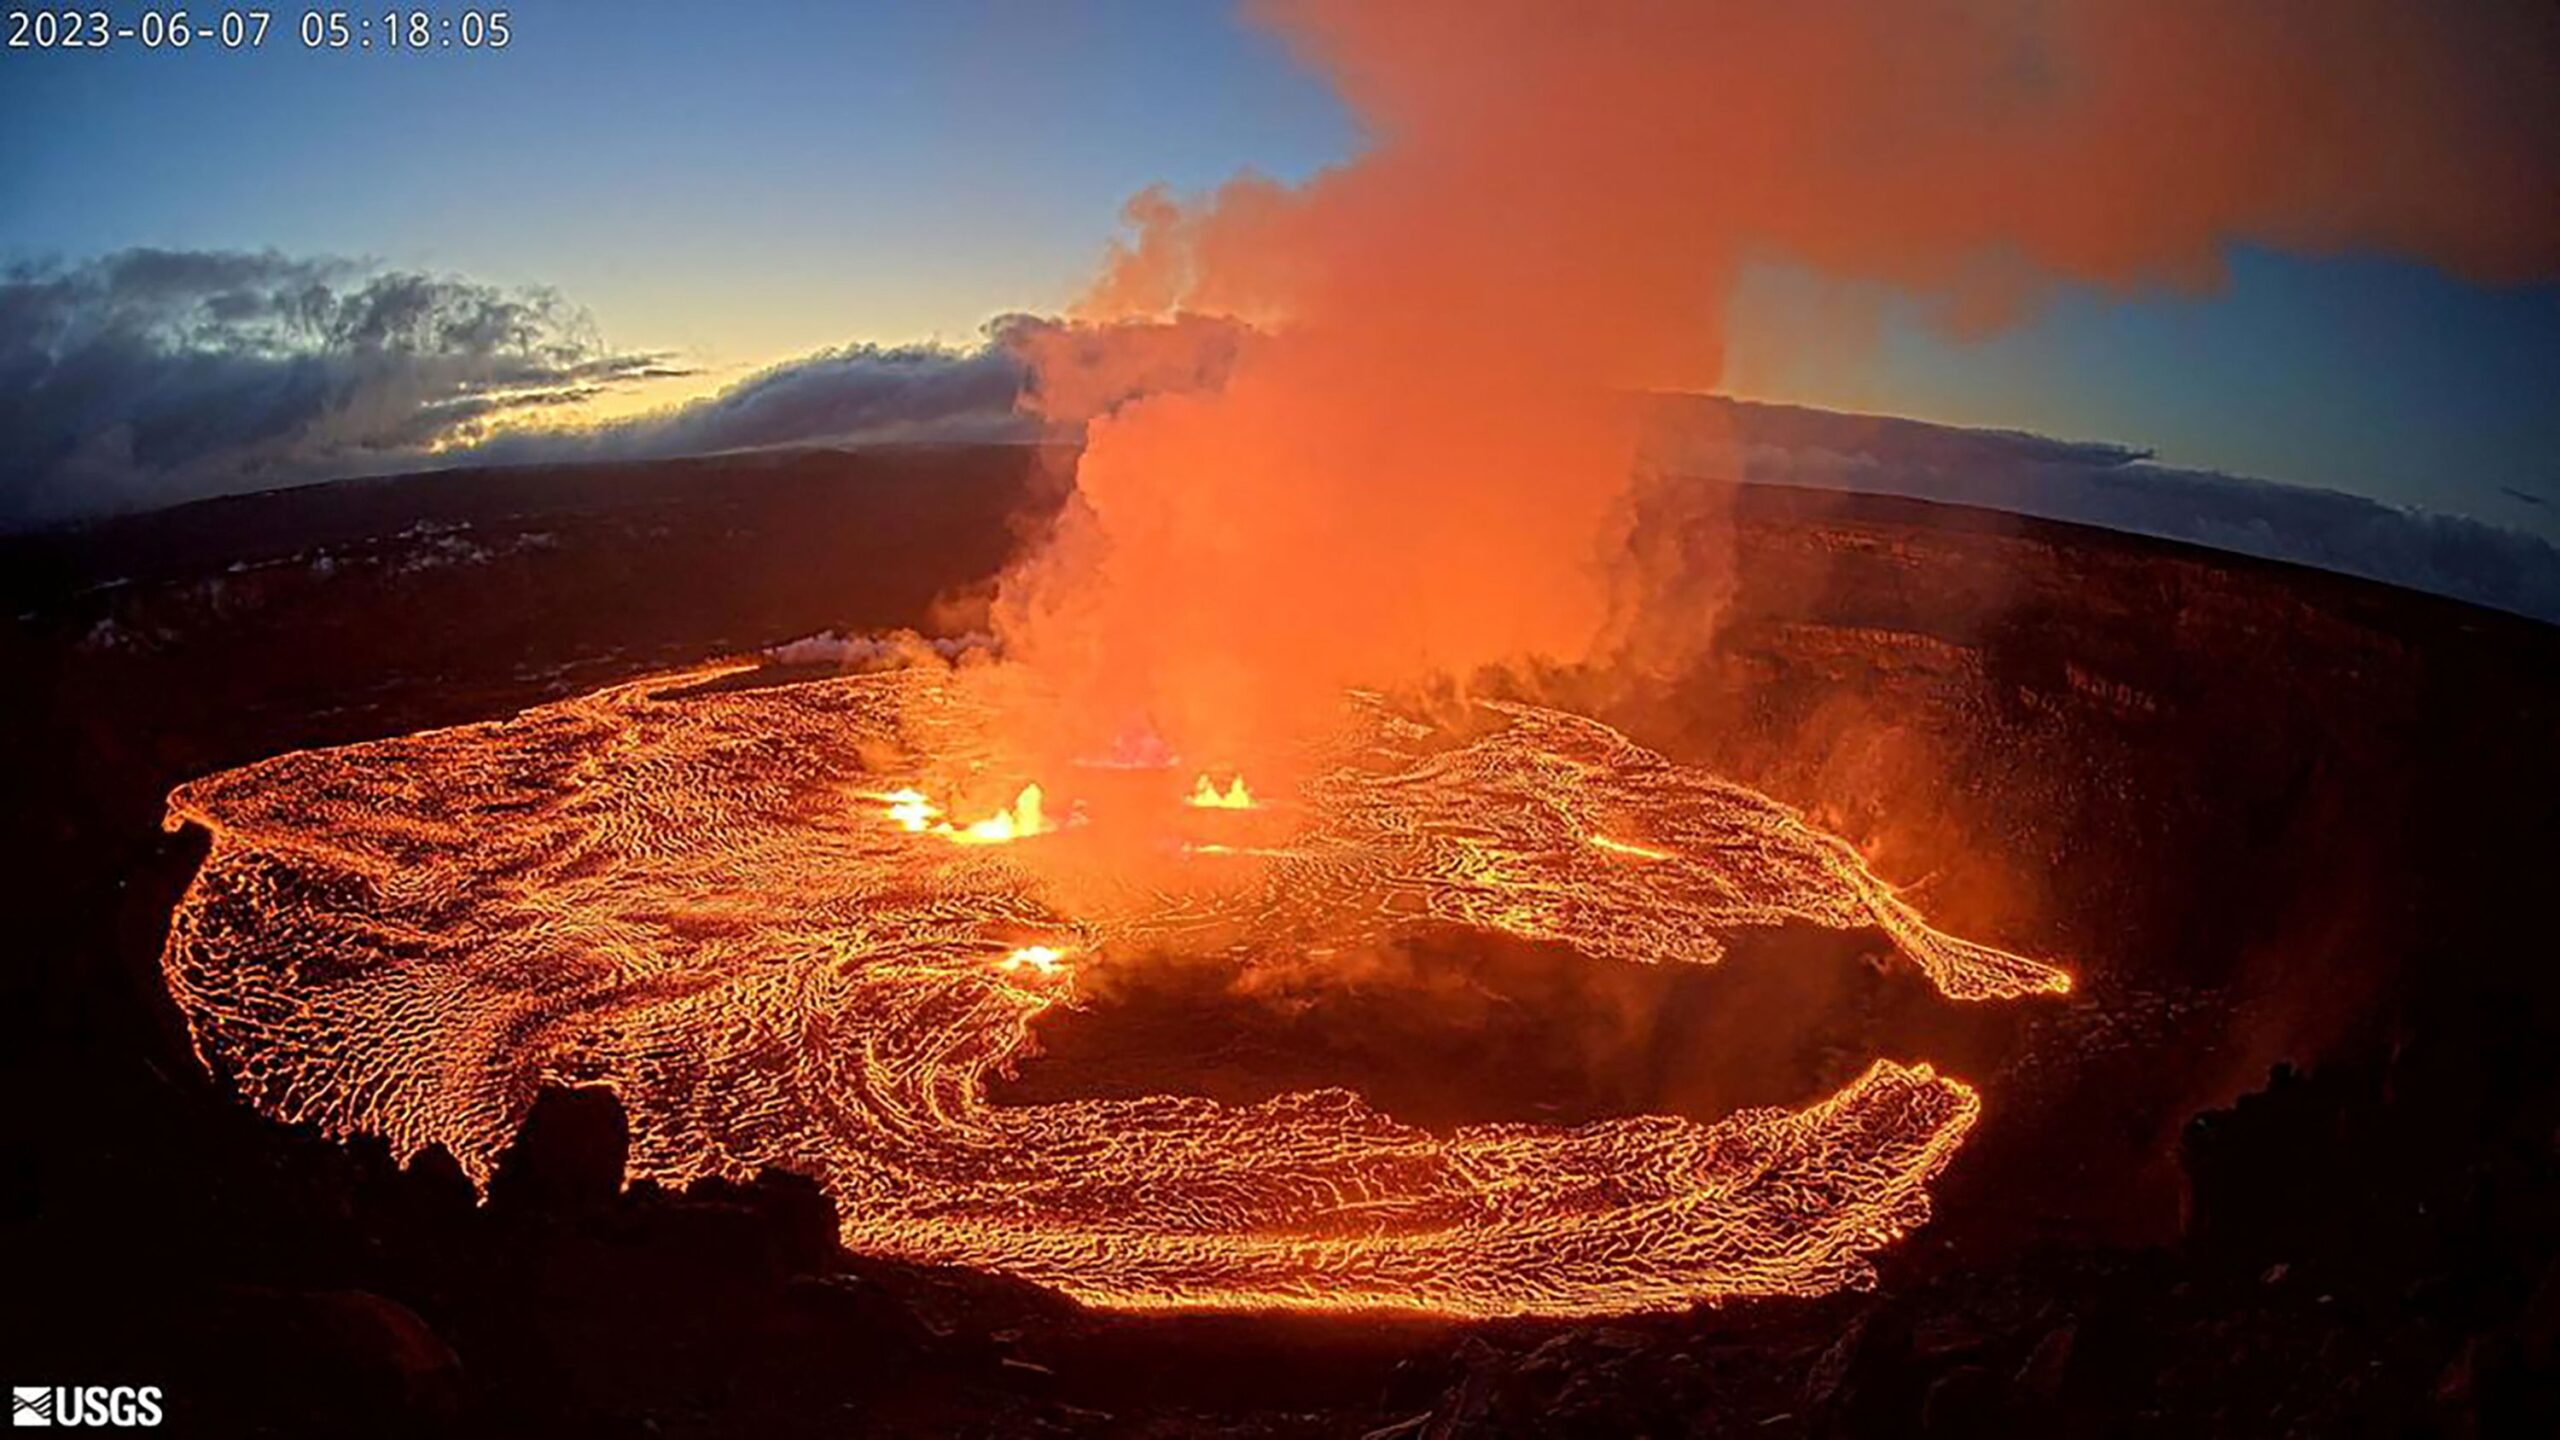 A lava lake forms at Halemaʻumaʻu as seen from the west rim of the Kilauea caldera during the vol...